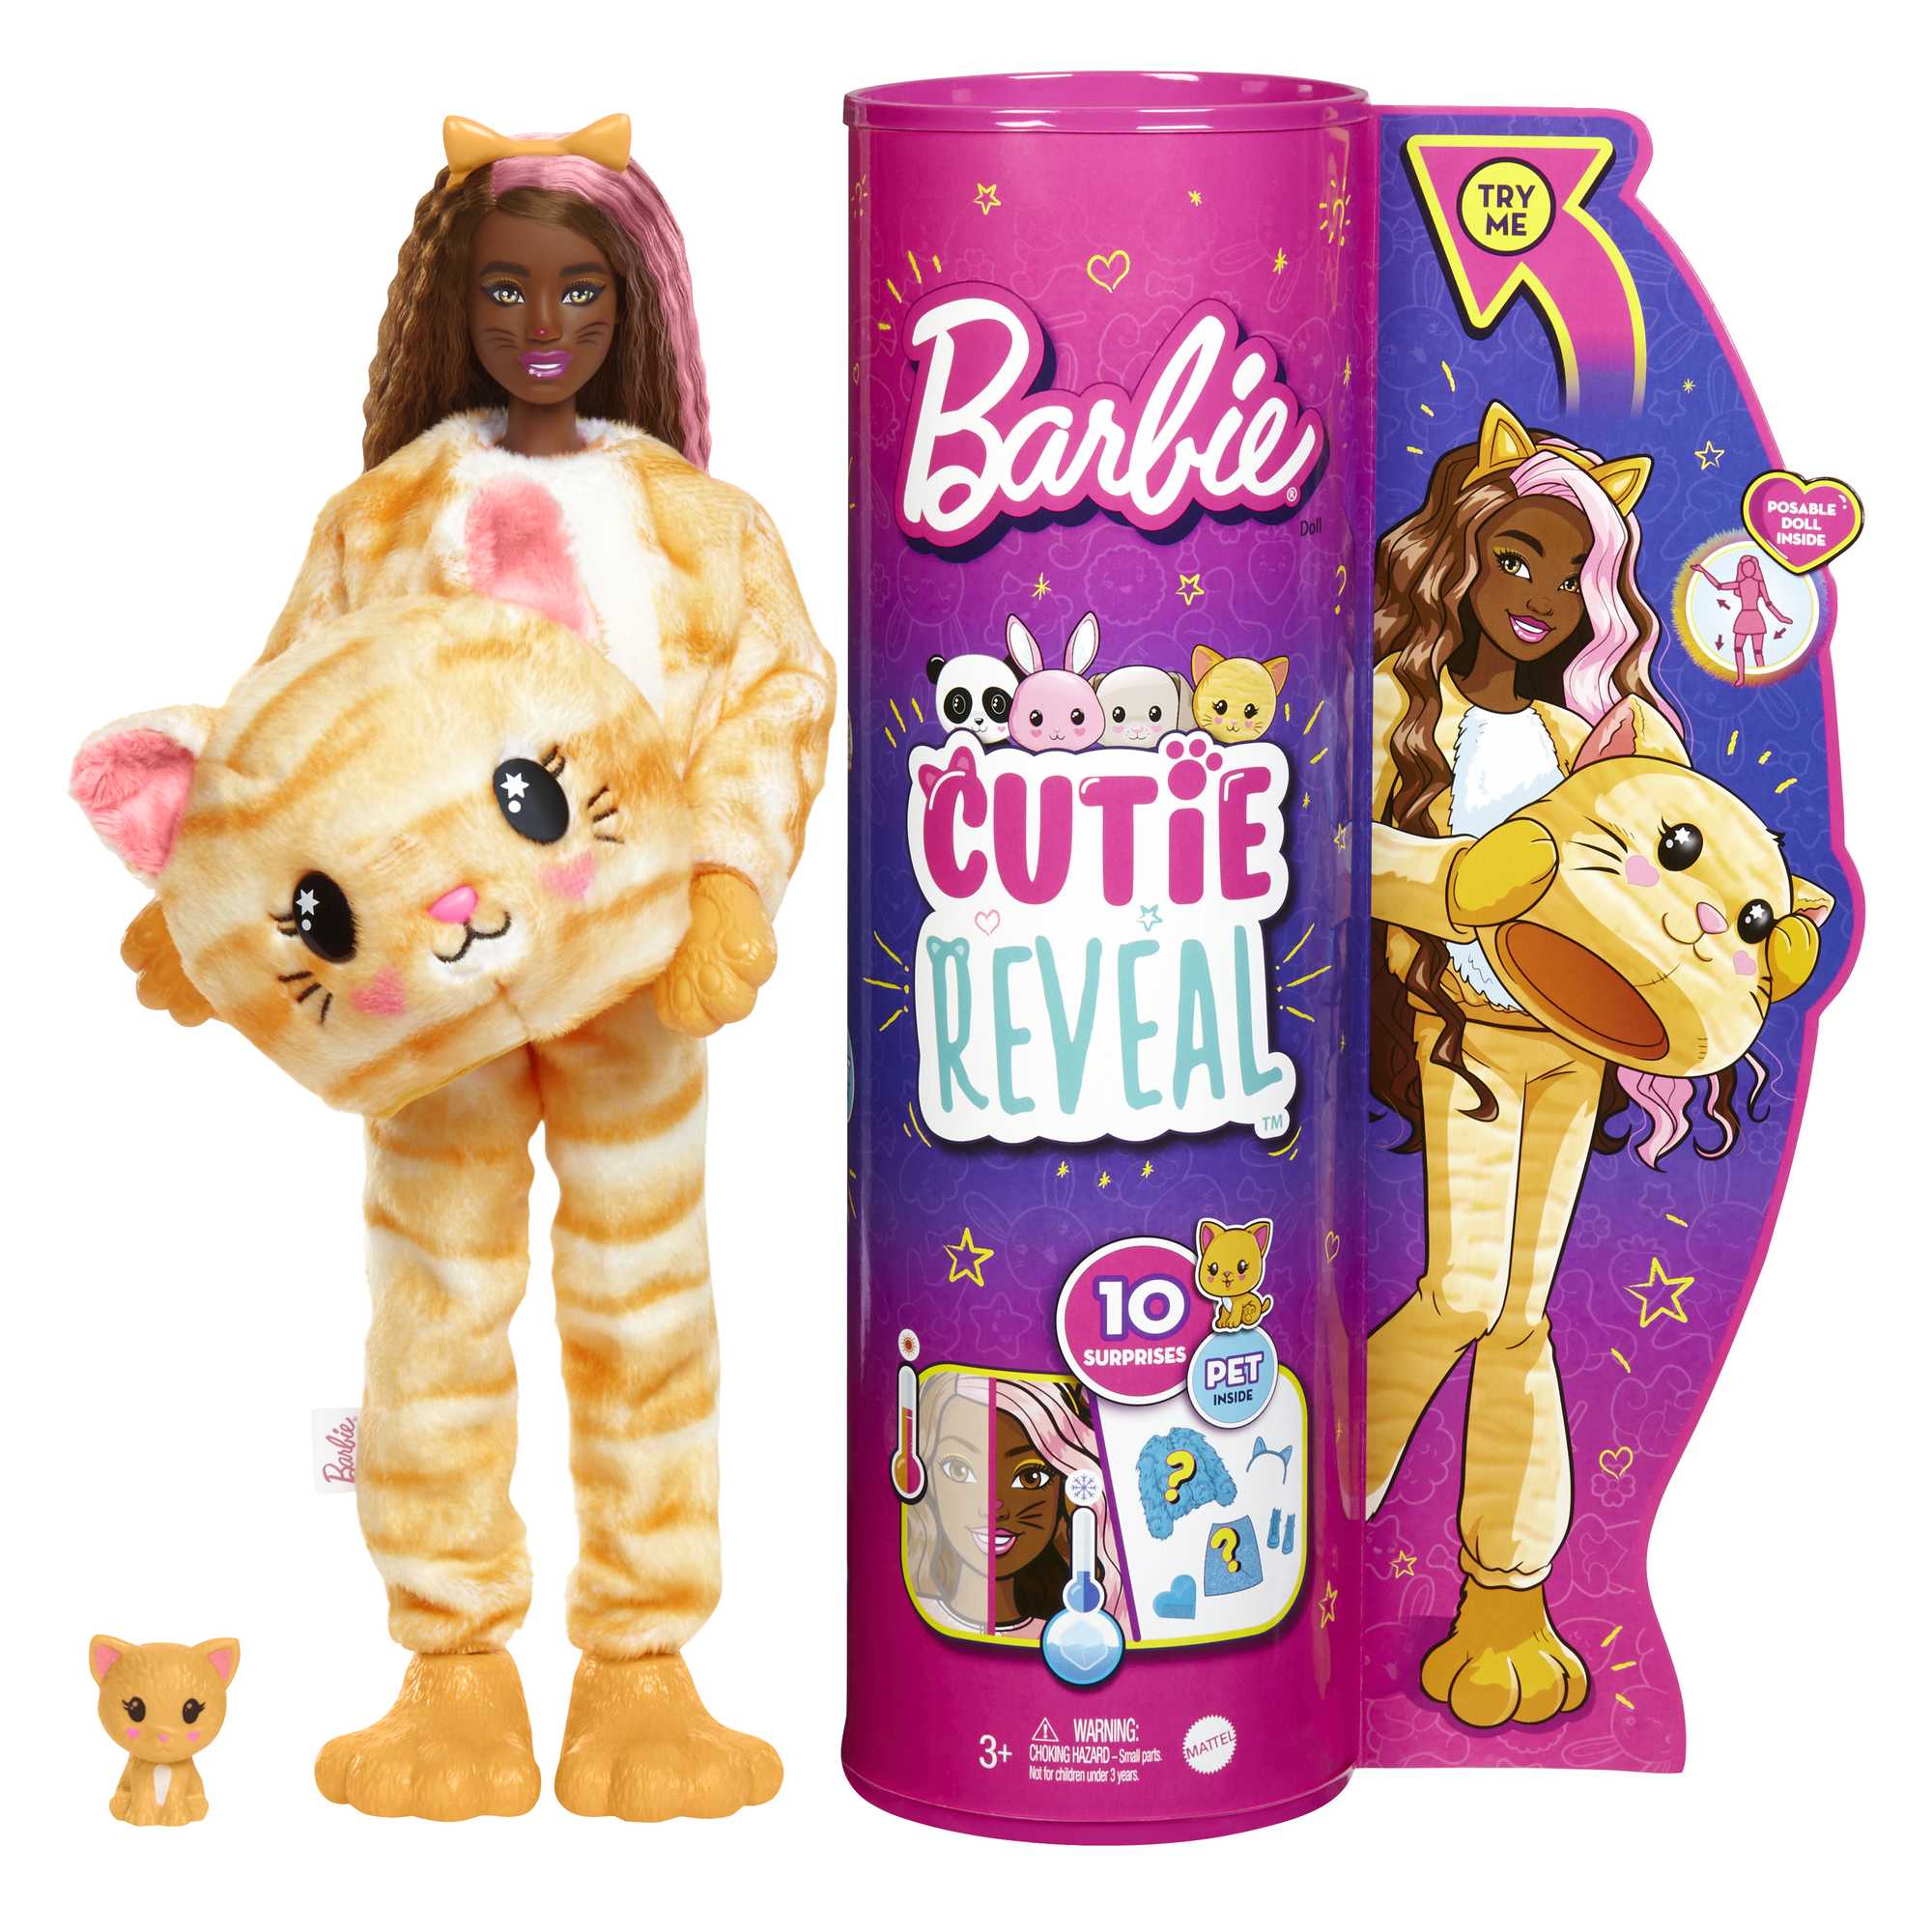 Barbie Cutie Reveal Kitty